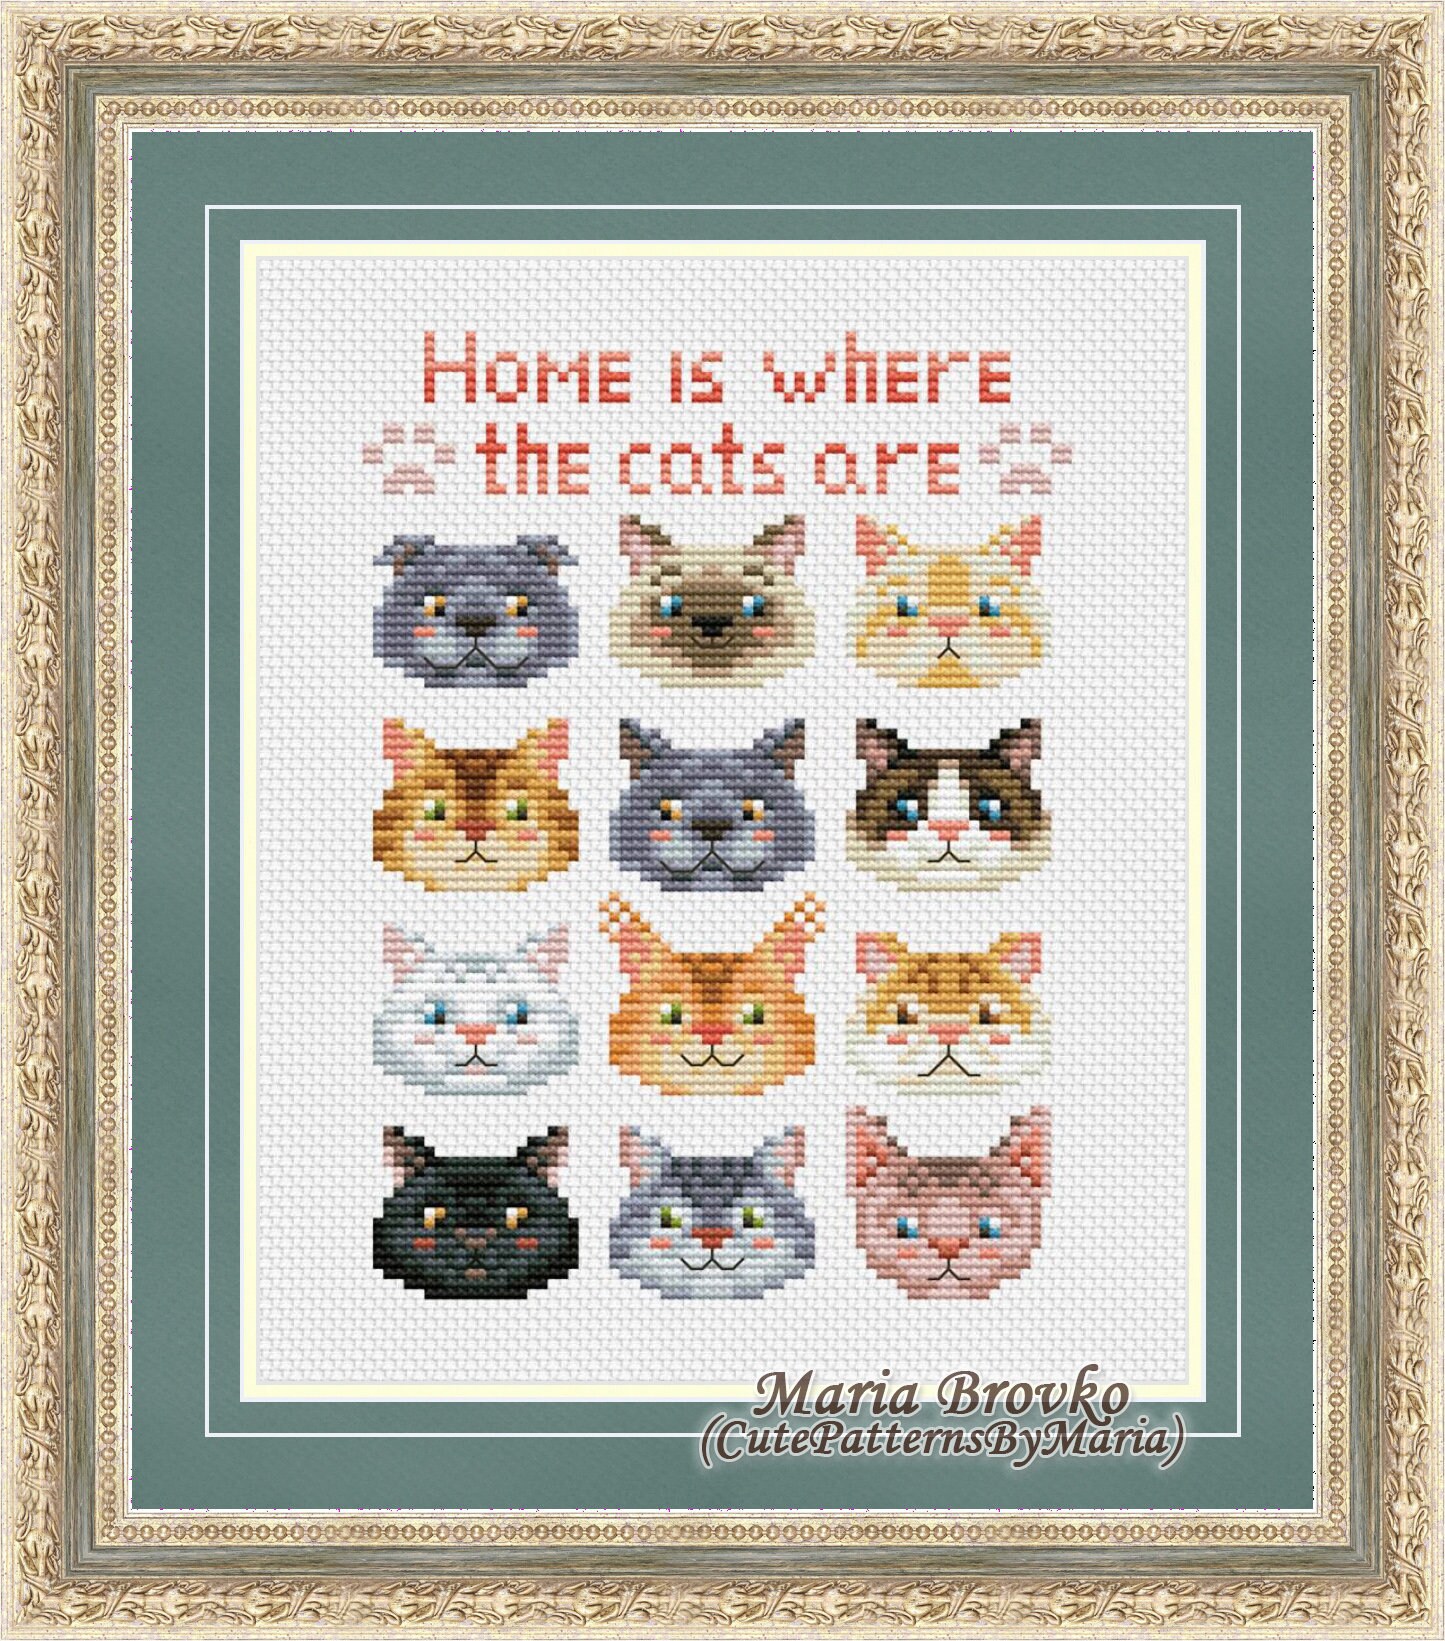 Cat Colors & Coat Patterns Poster-kitty Breed Markings  Identification-kitten Type Id-cat Lover Print-veterinary Office Decor-kids  Room Wall -  Australia